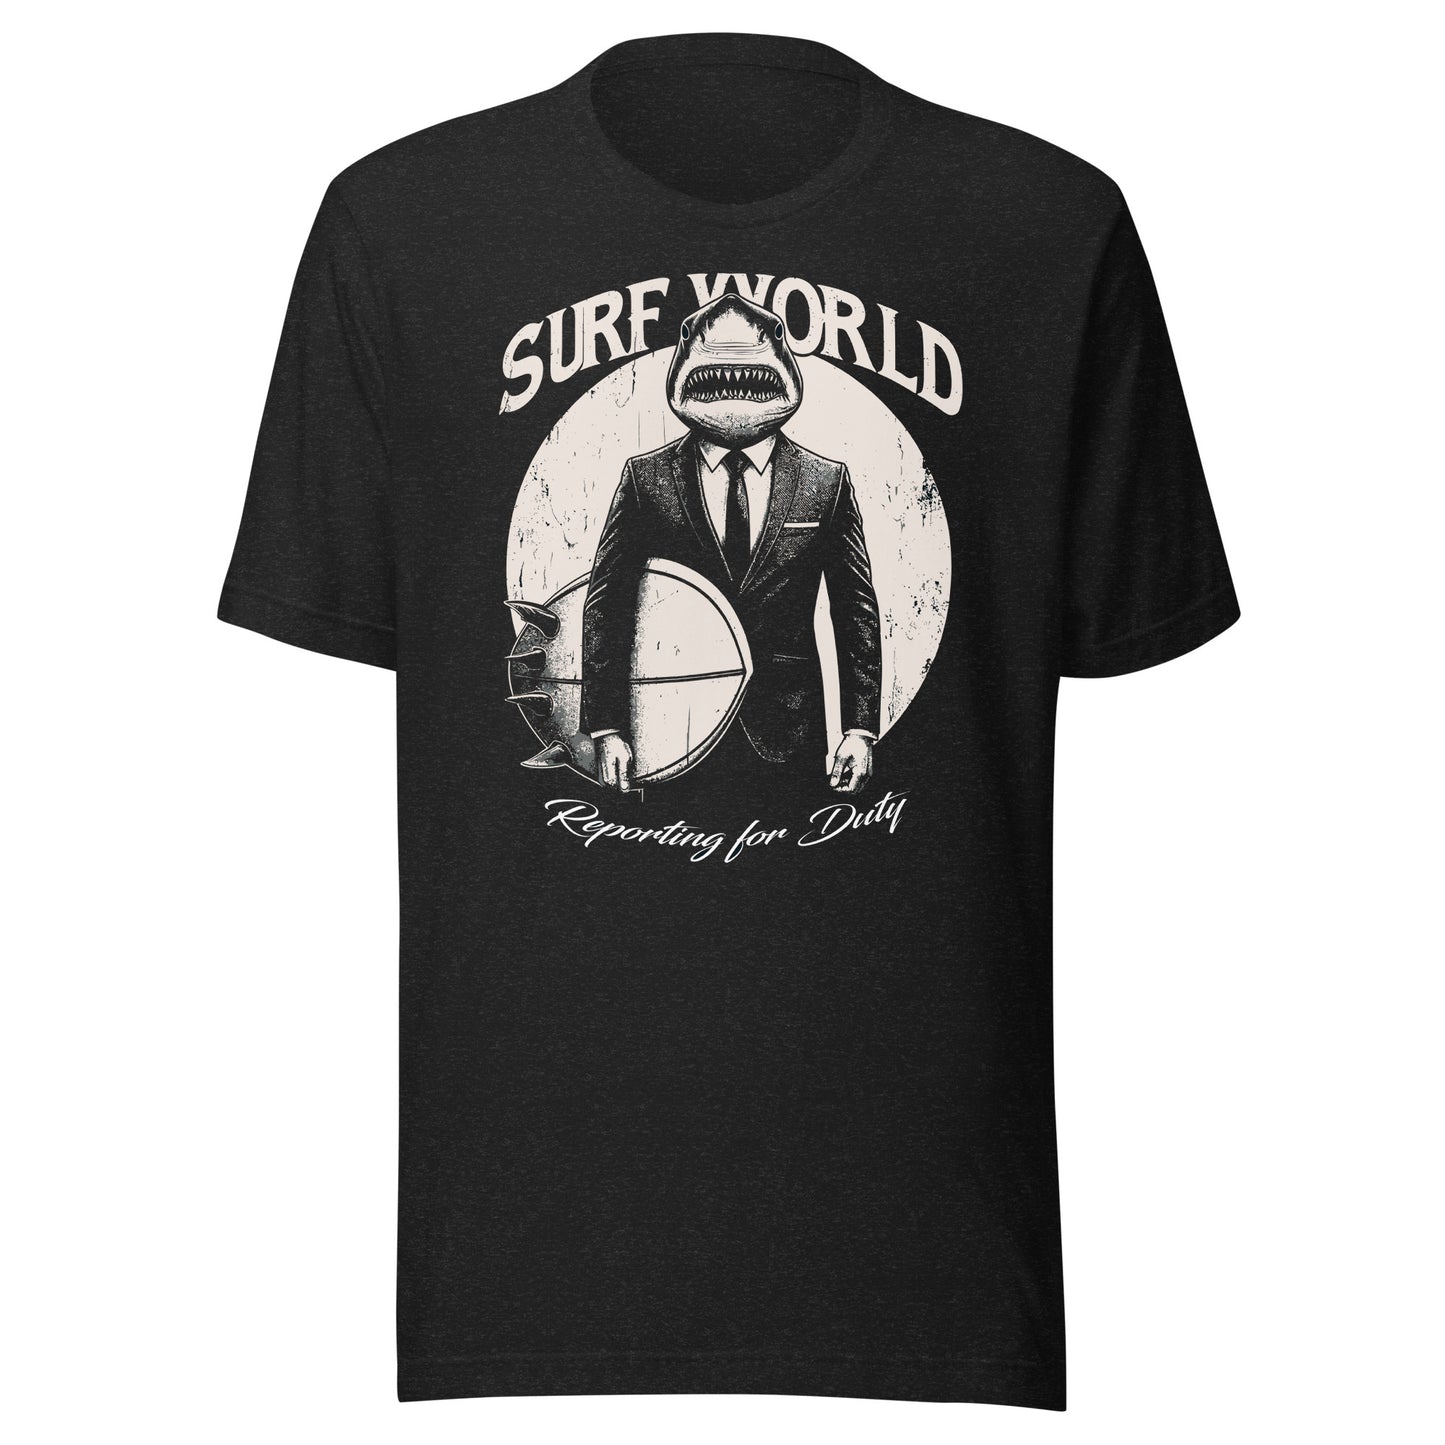 Surf World Shark Boss Reporting for Duty Tee Shirt Mens T Shirt Black Heather